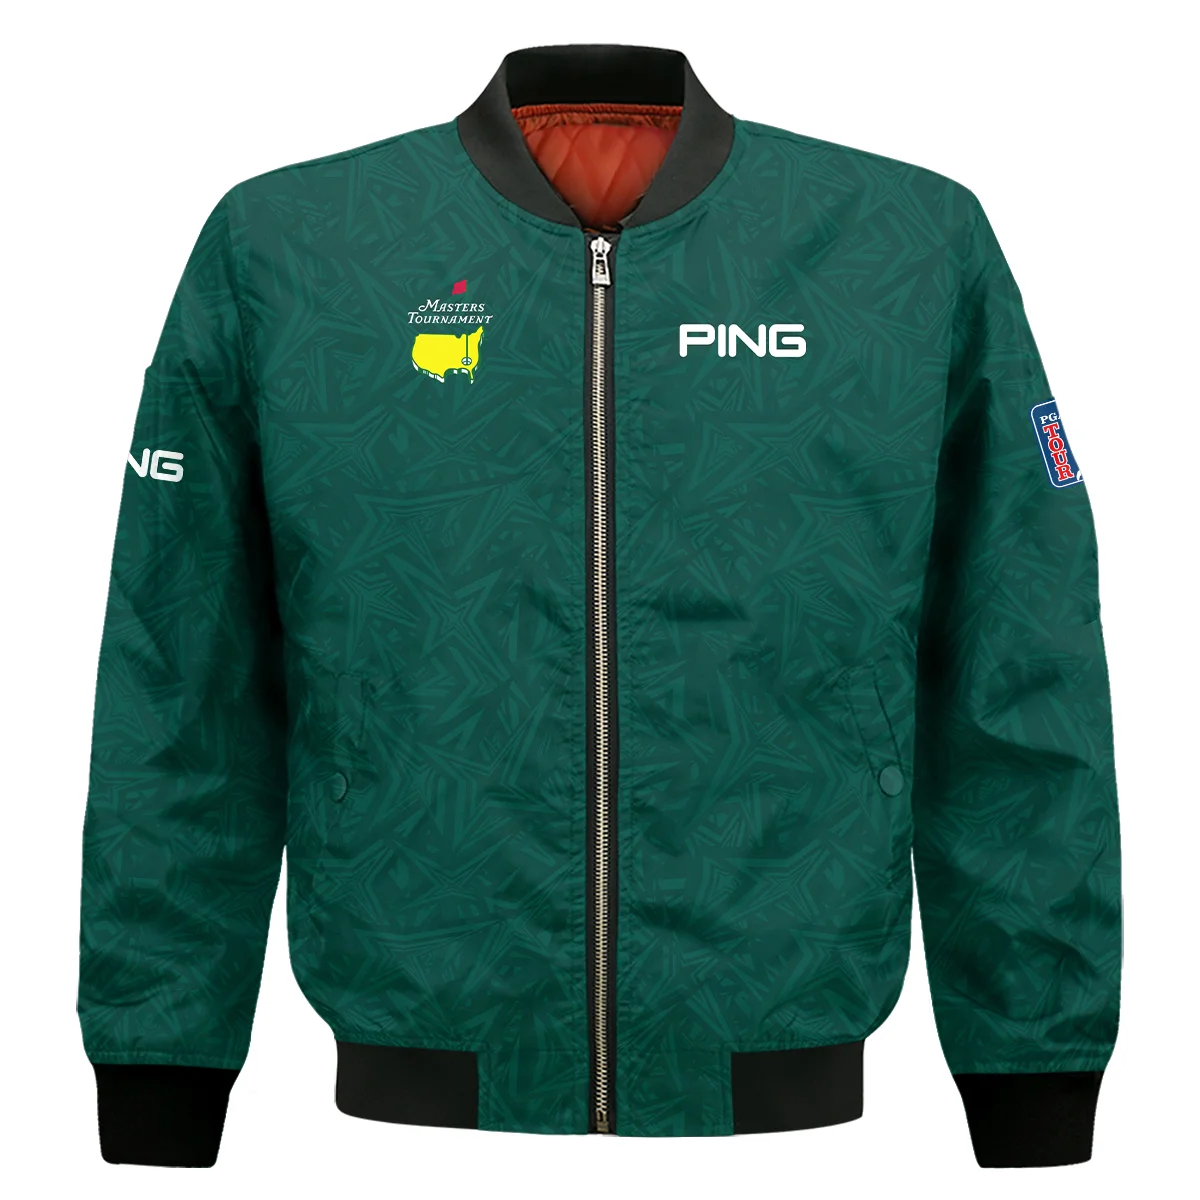 Stars Dark Green Abstract Sport Masters Tournament Ping Unisex Sweatshirt Style Classic Sweatshirt